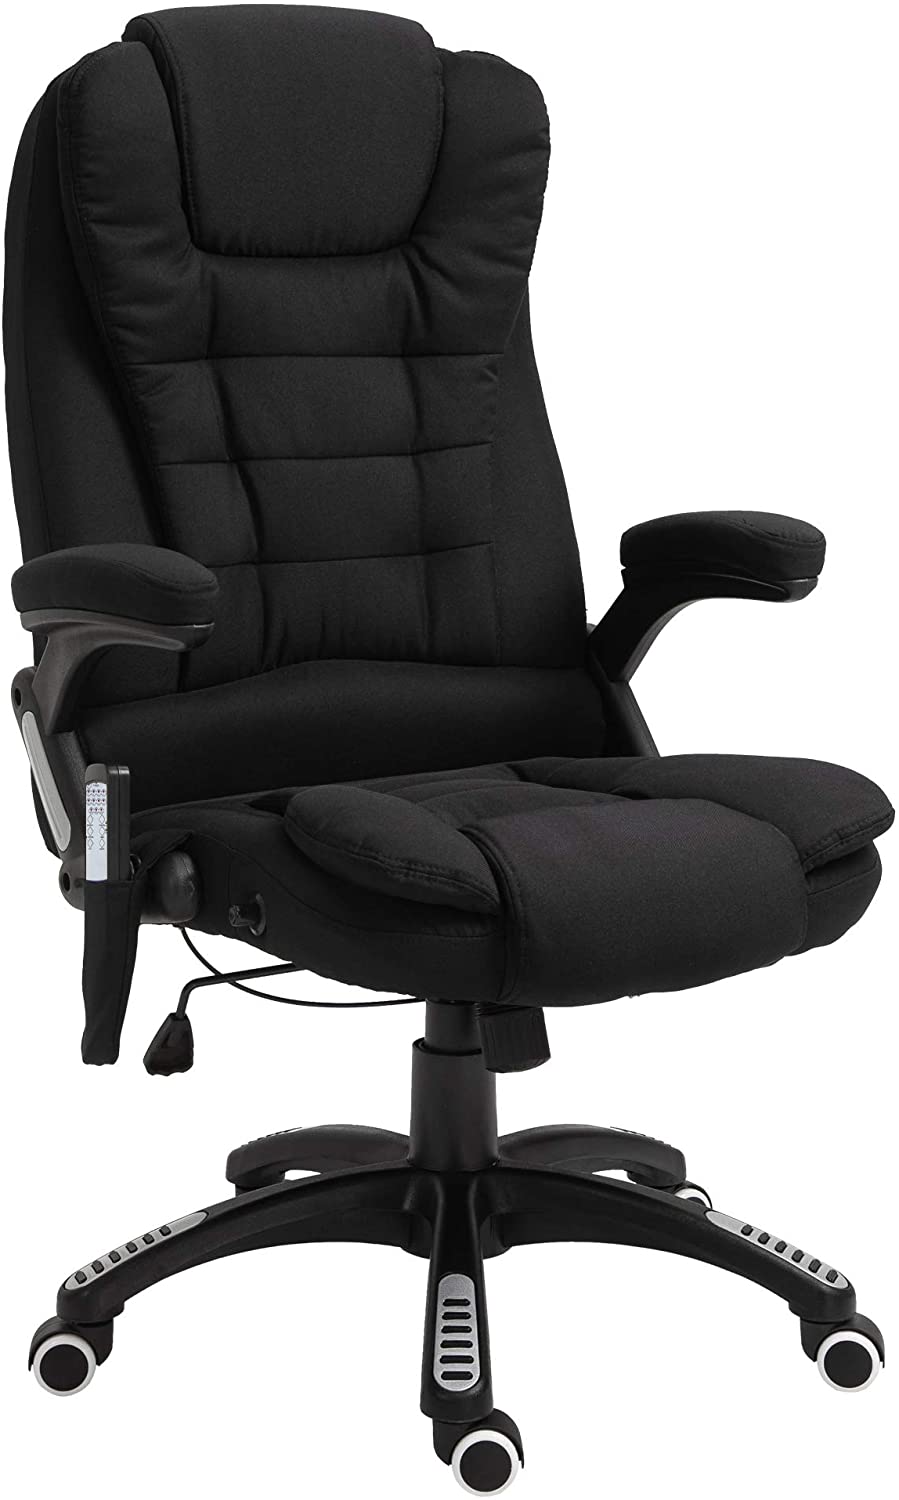 Vignette Ergonomic Vibrating Massage Office Chair